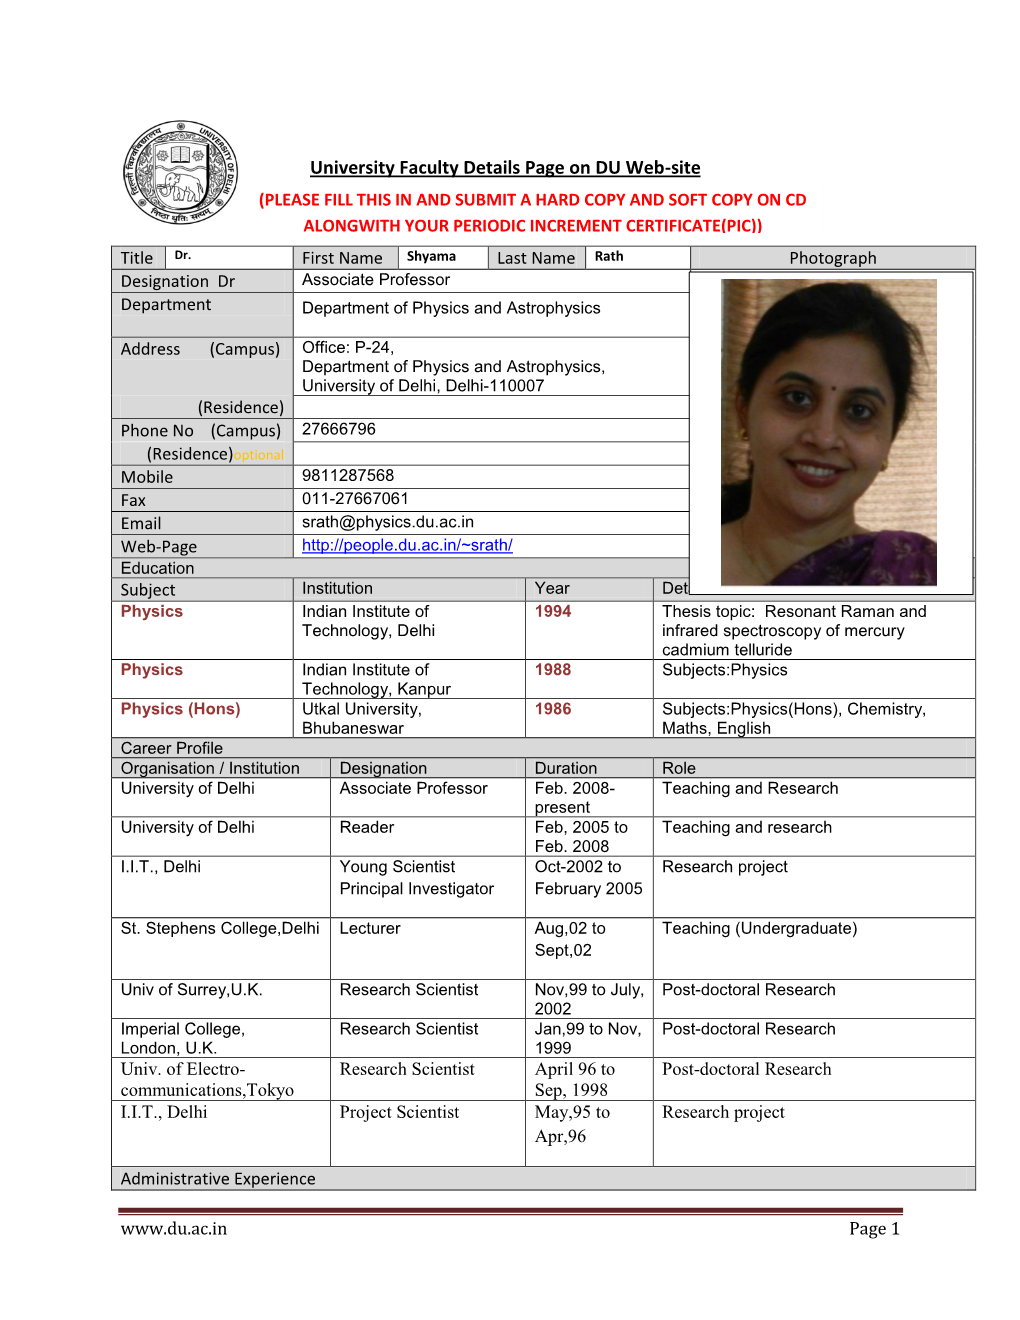 University Faculty Details Page on DU Web-Site